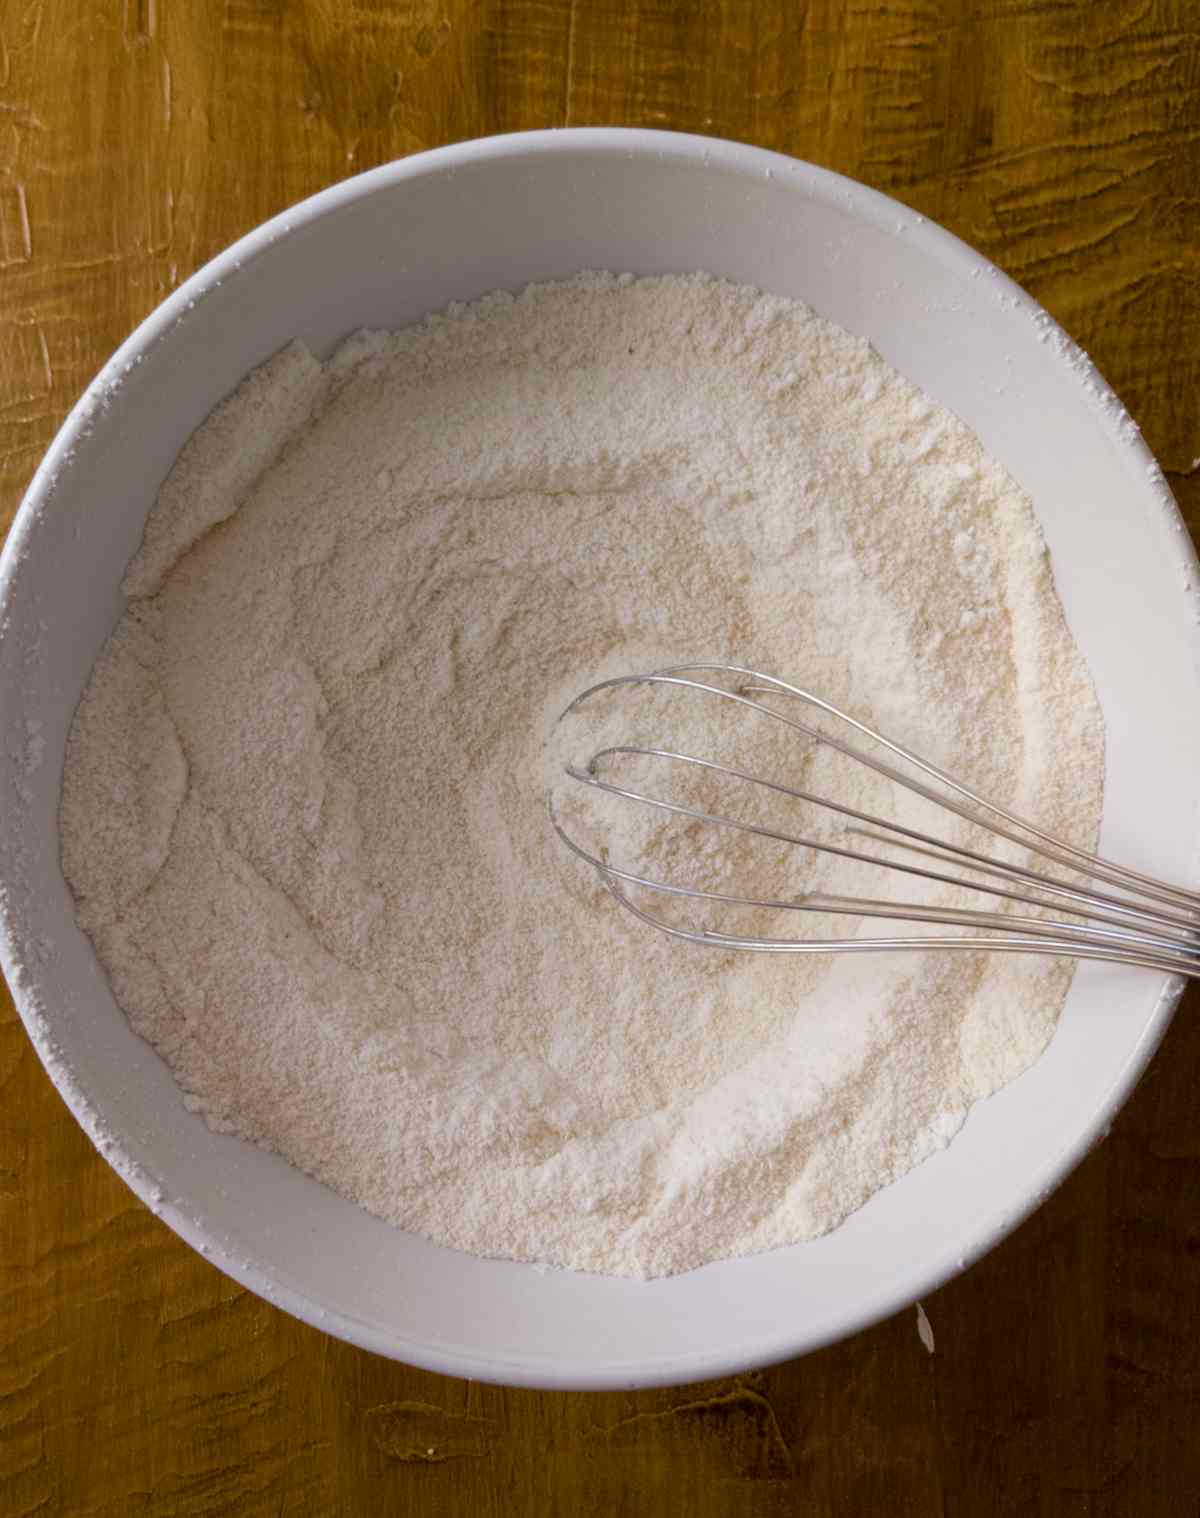 Whisking almond flour with powdered sugar.